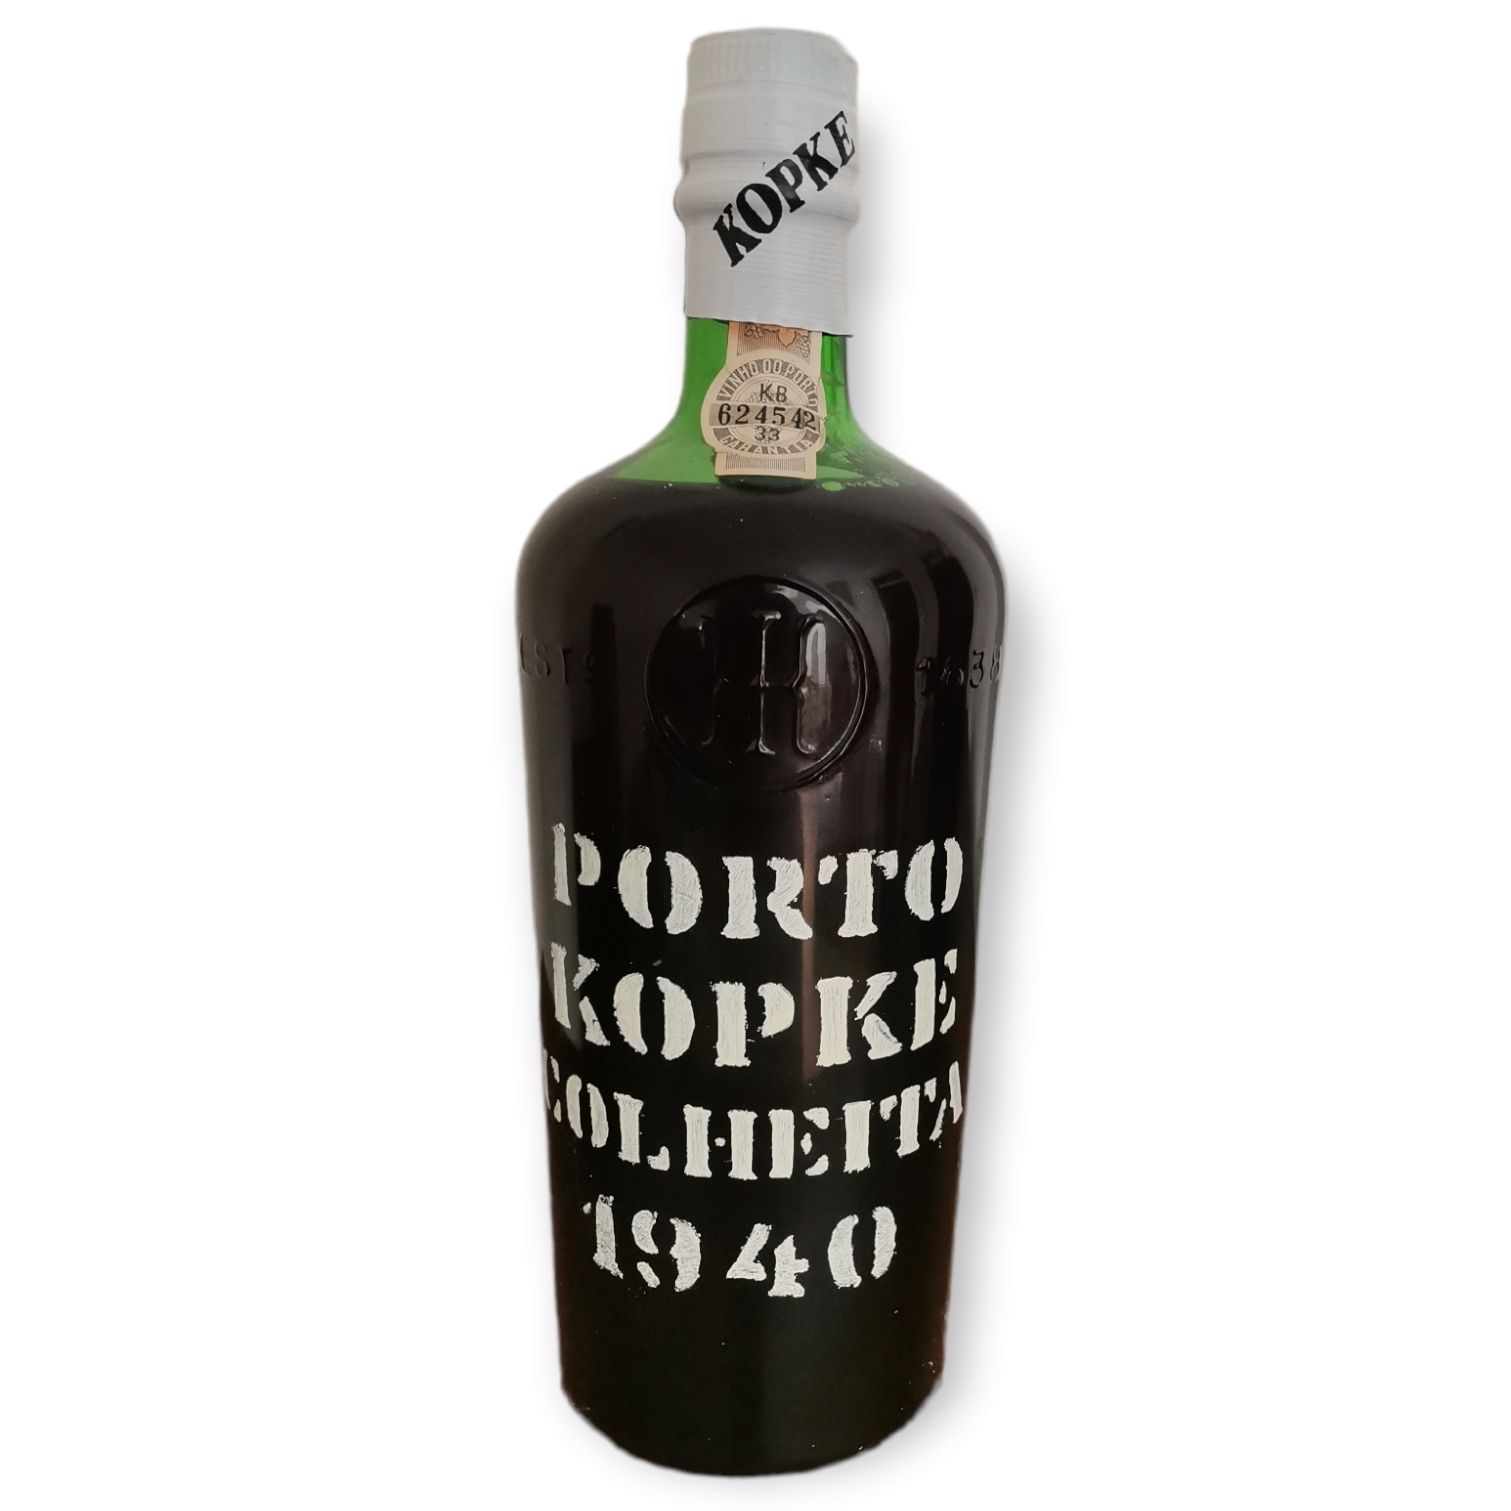 Kopke KOPKE波特酒瓶。1940年的收获，1982年装瓶。